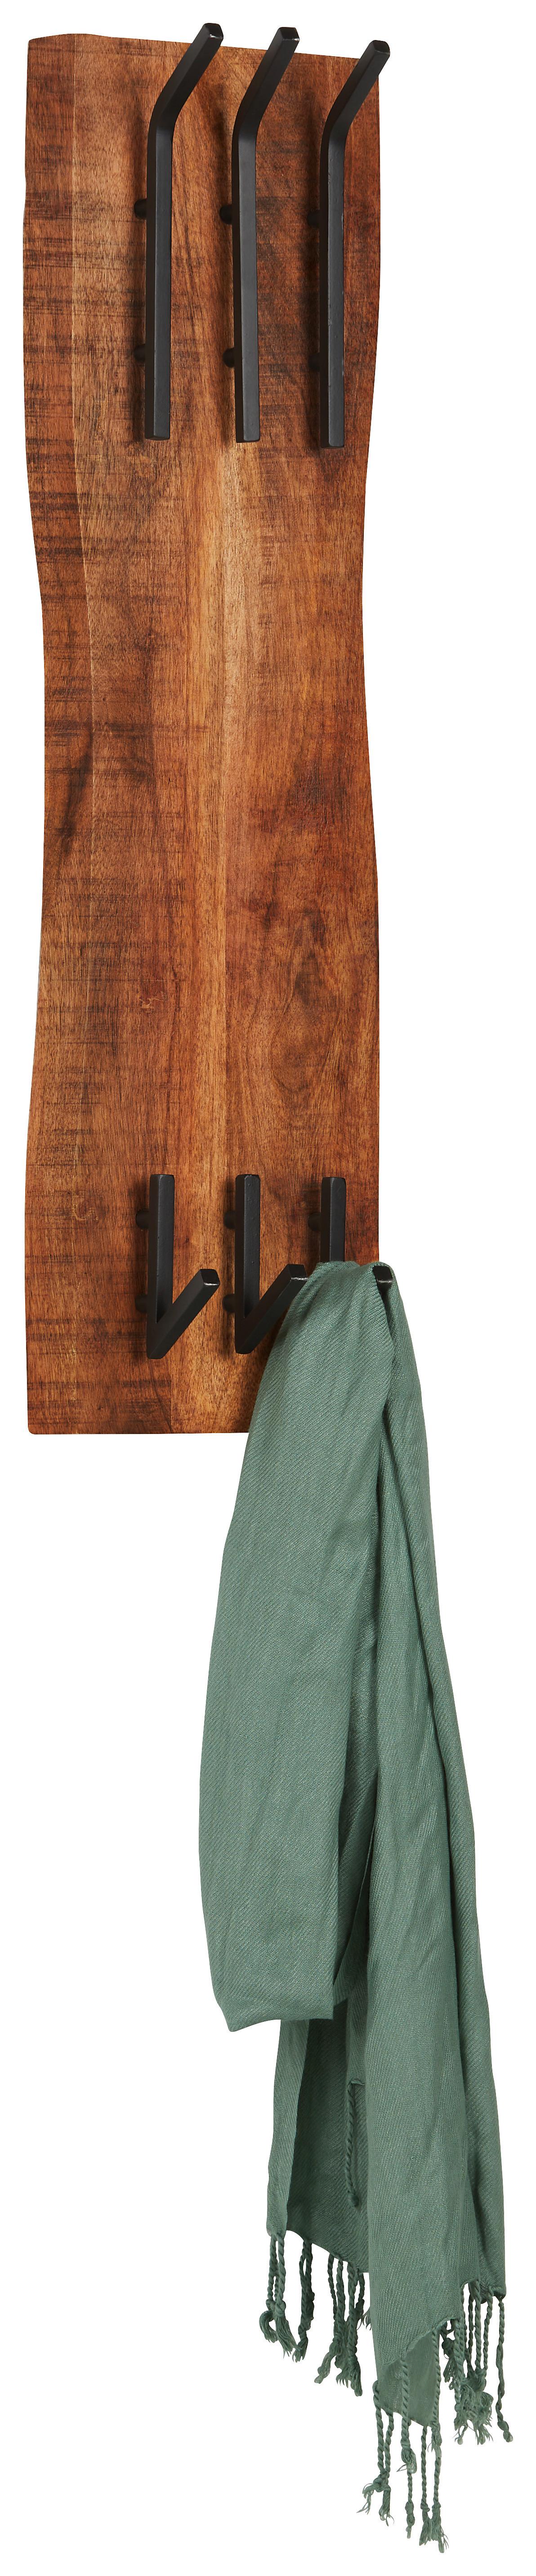 Garderobenpaneel aus Mangoholz - LIFESTYLE, Holz/Metall (20/69/10cm) - Modern Living